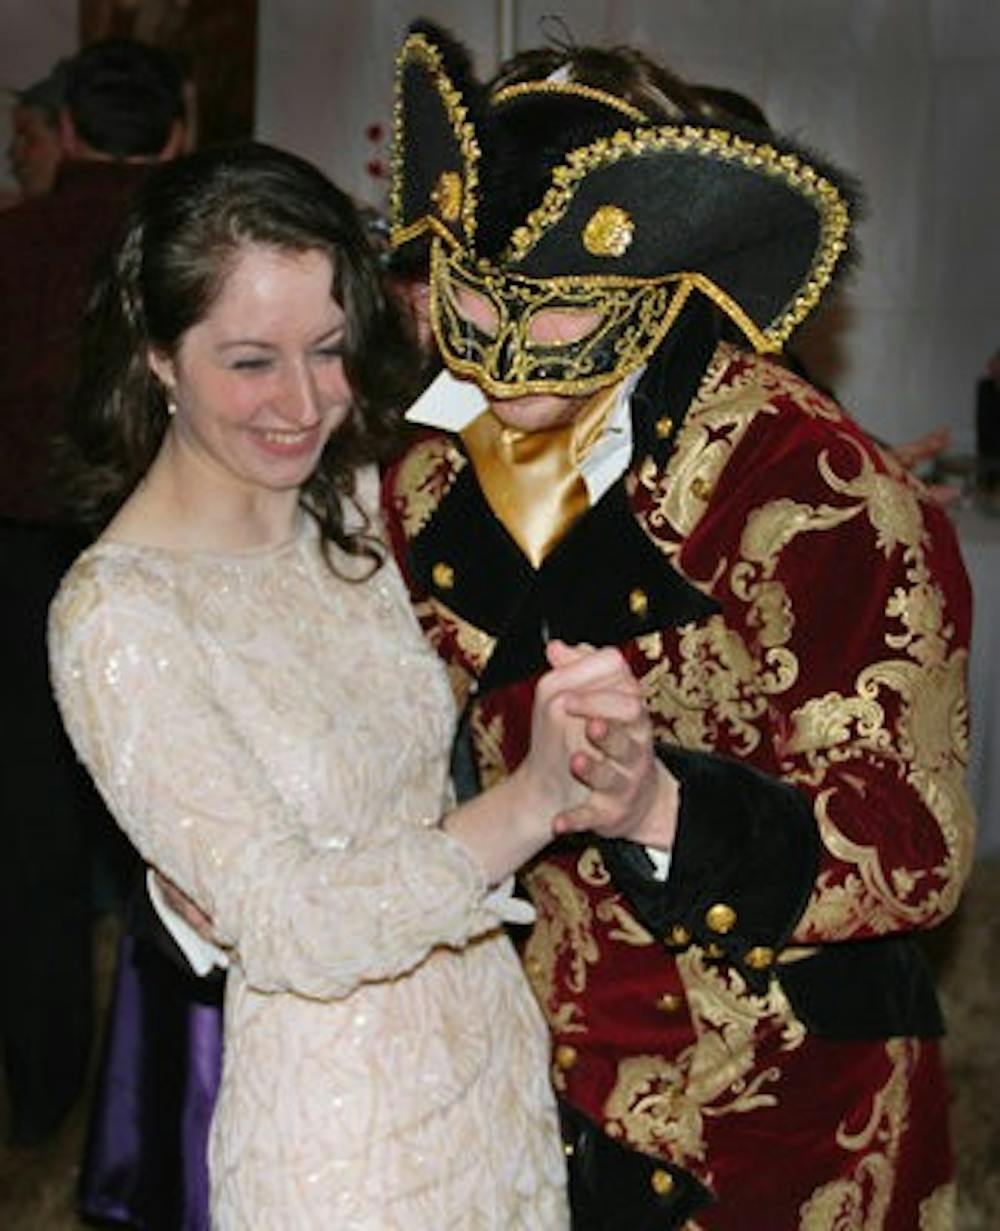 Kelly Davino and Chase Cox enjoy a night of dancing at the Carnivale masquerade ball Feb. 12. (Daniel Friday / Photo Staff)